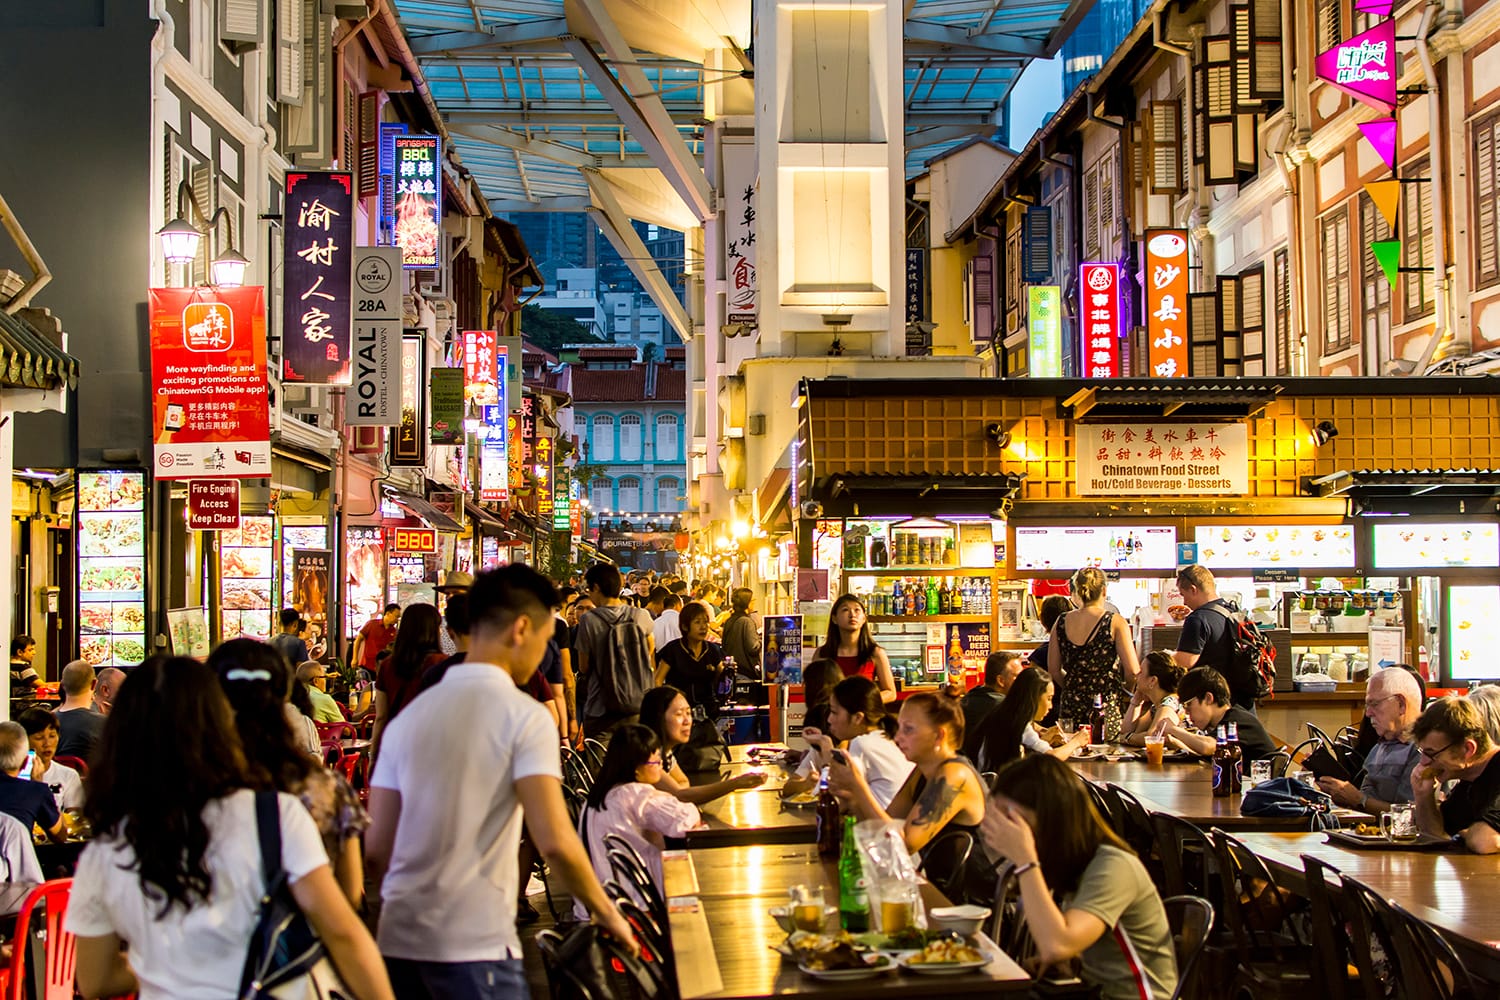 Chinatown food street (CFS) in Singapore